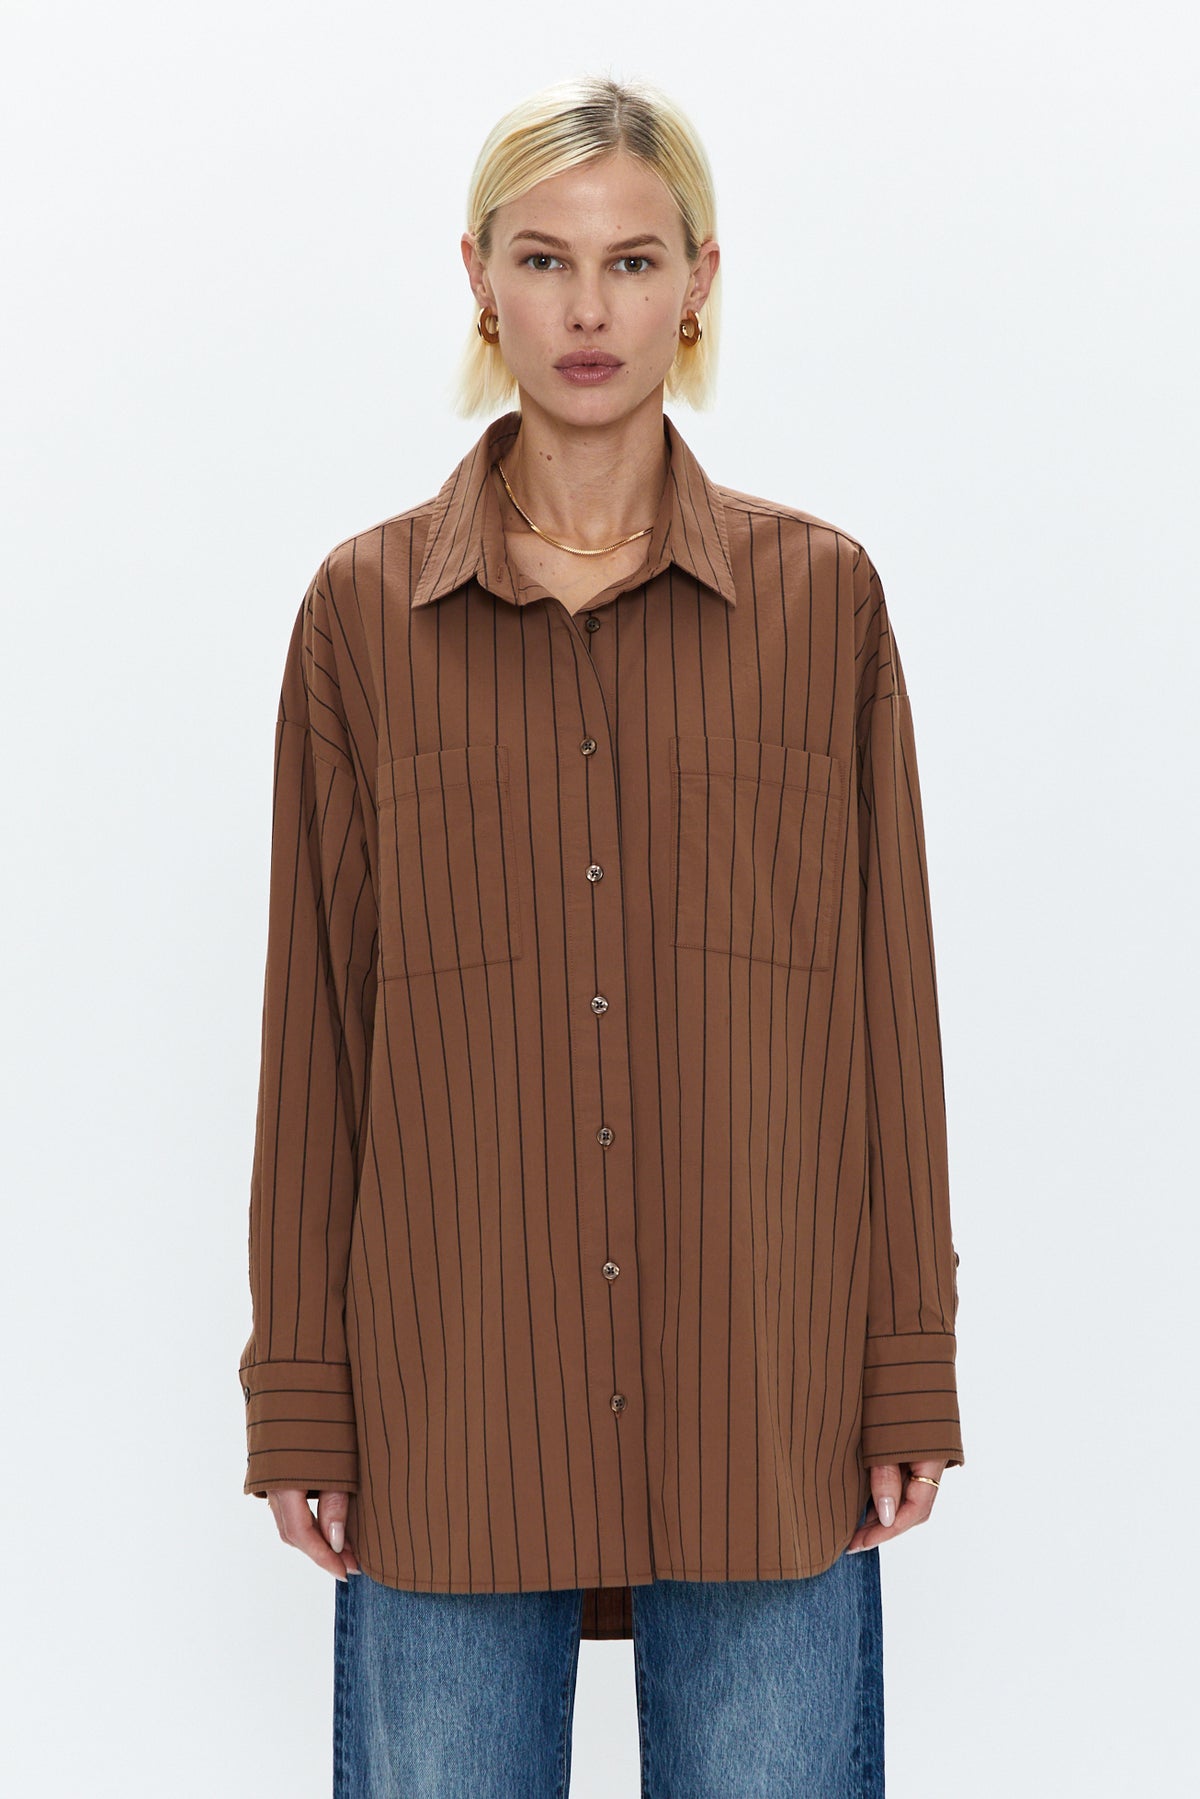 Rena Button Down Tunic Shirt - Chestnut Noir Stripe
            
              Sale